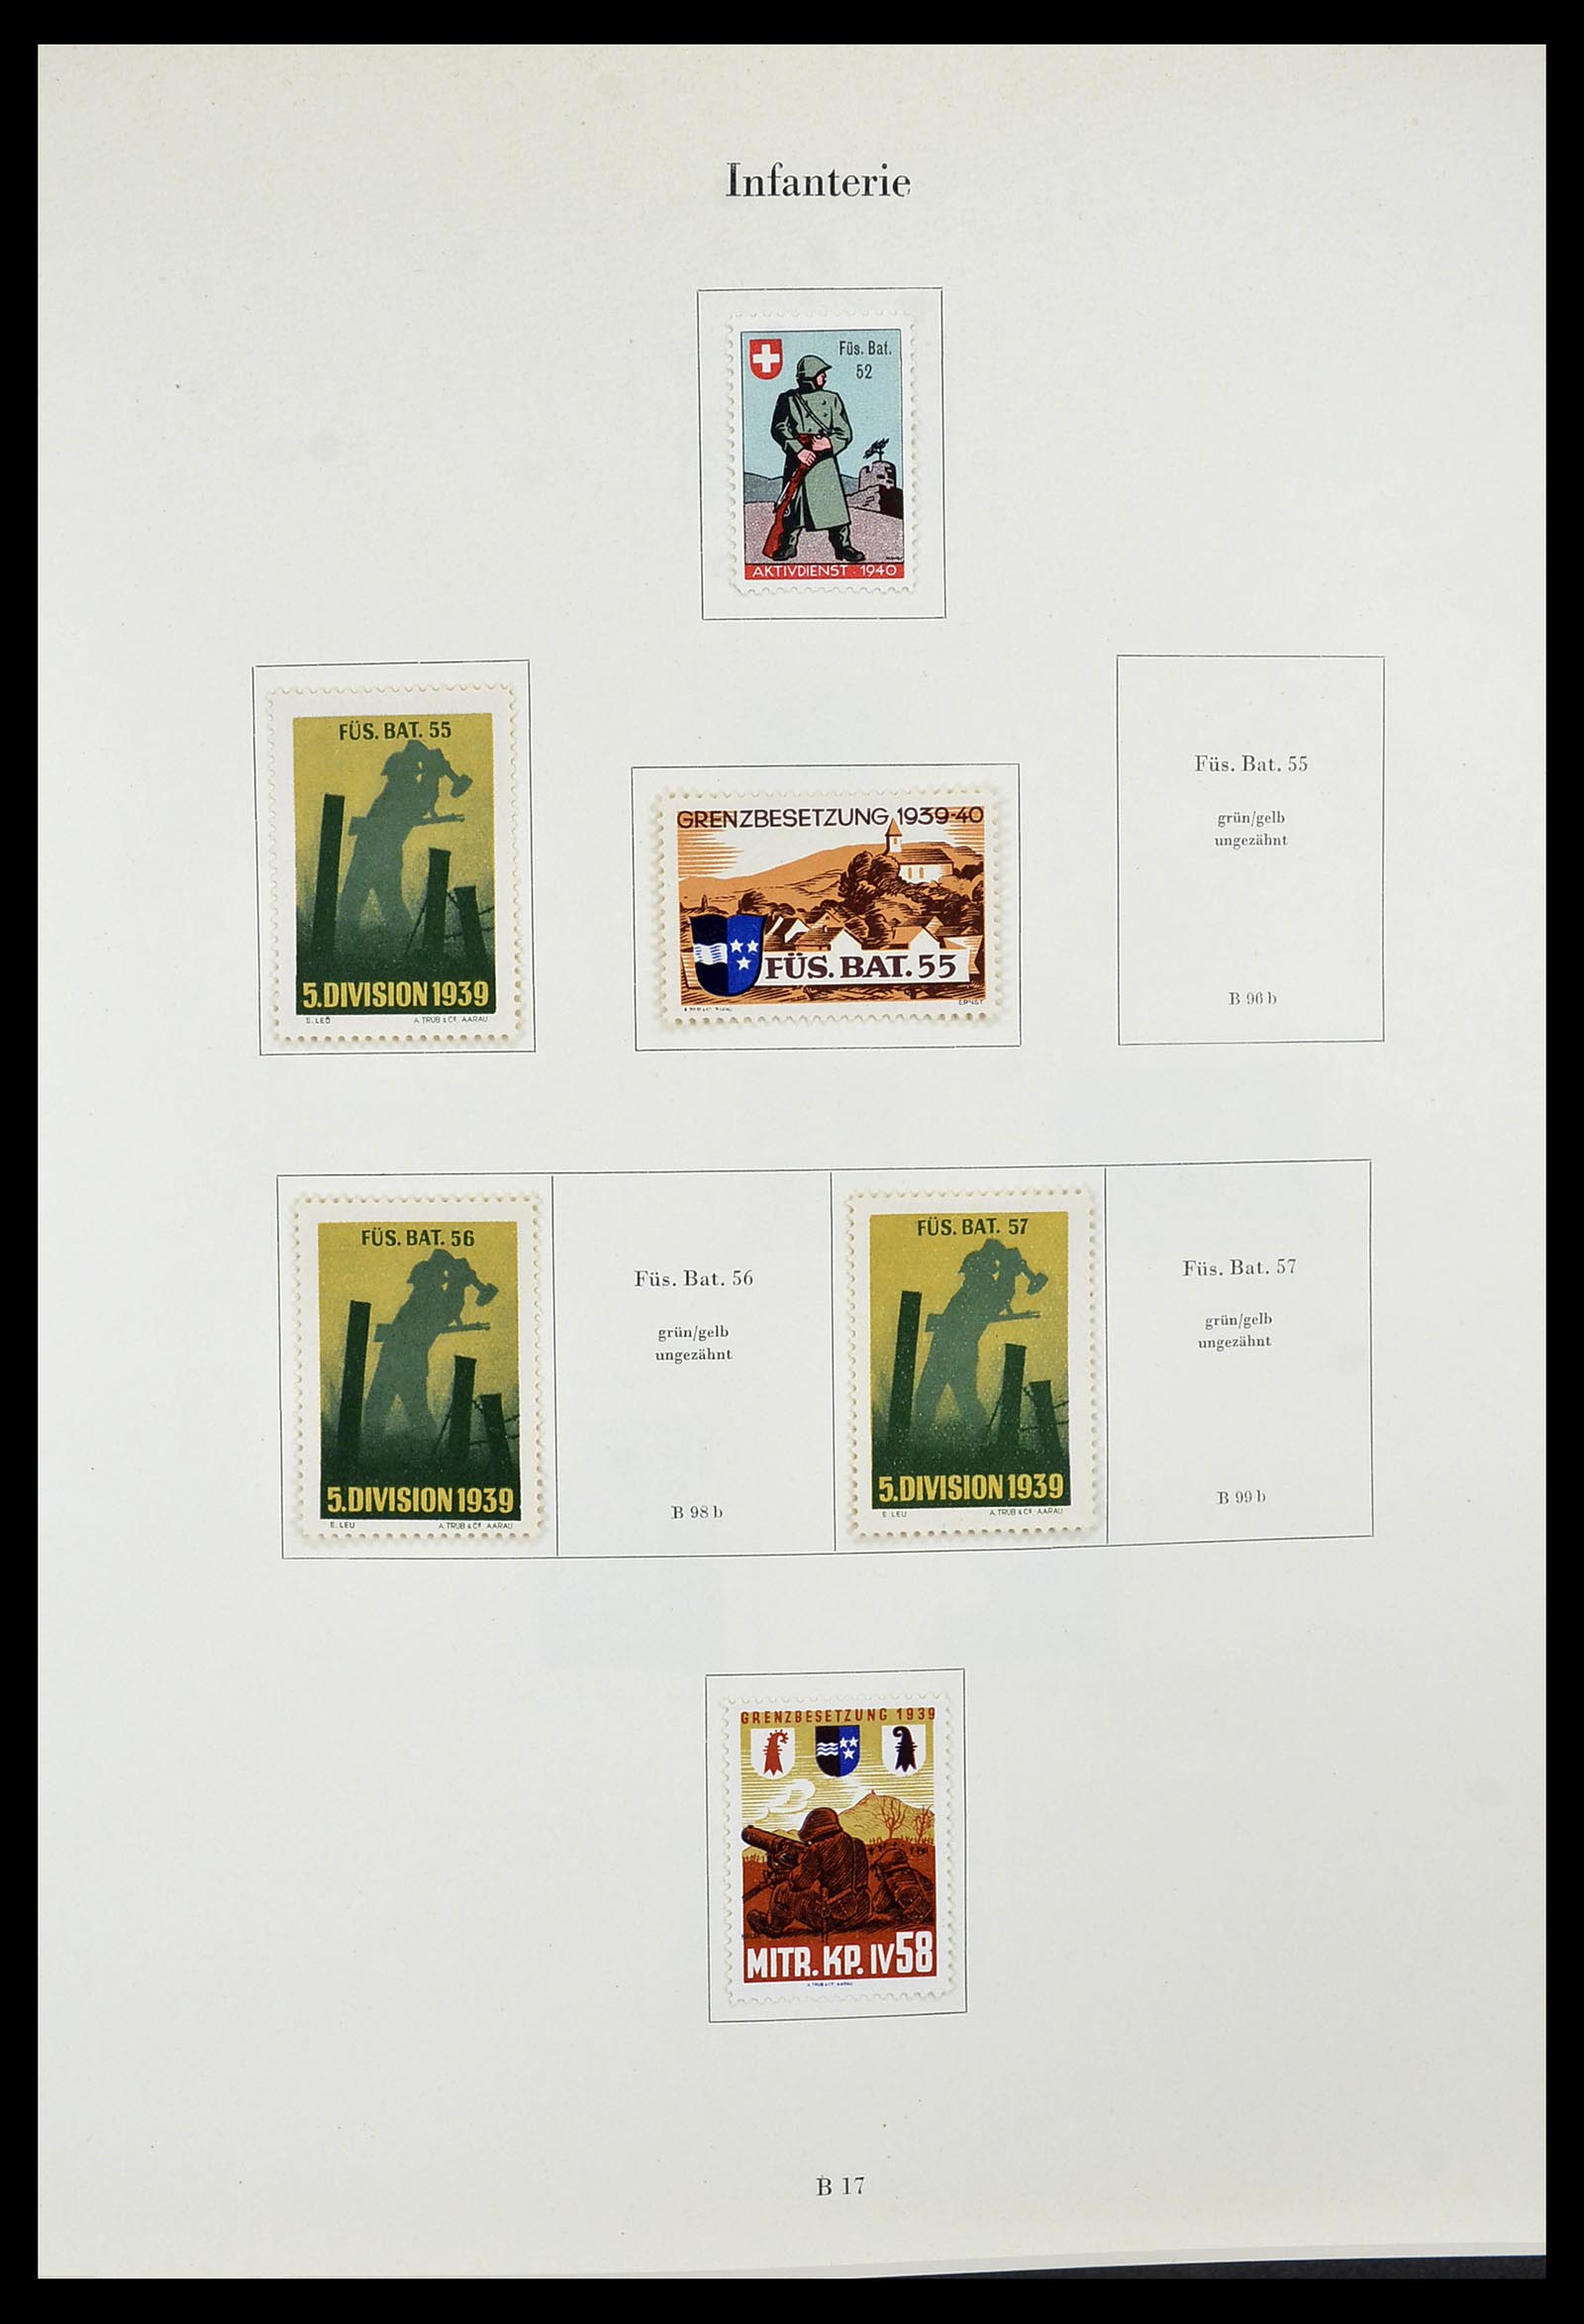 34234 031 - Stamp collection 34234 Switzerland soldier stamps 1939-1945.